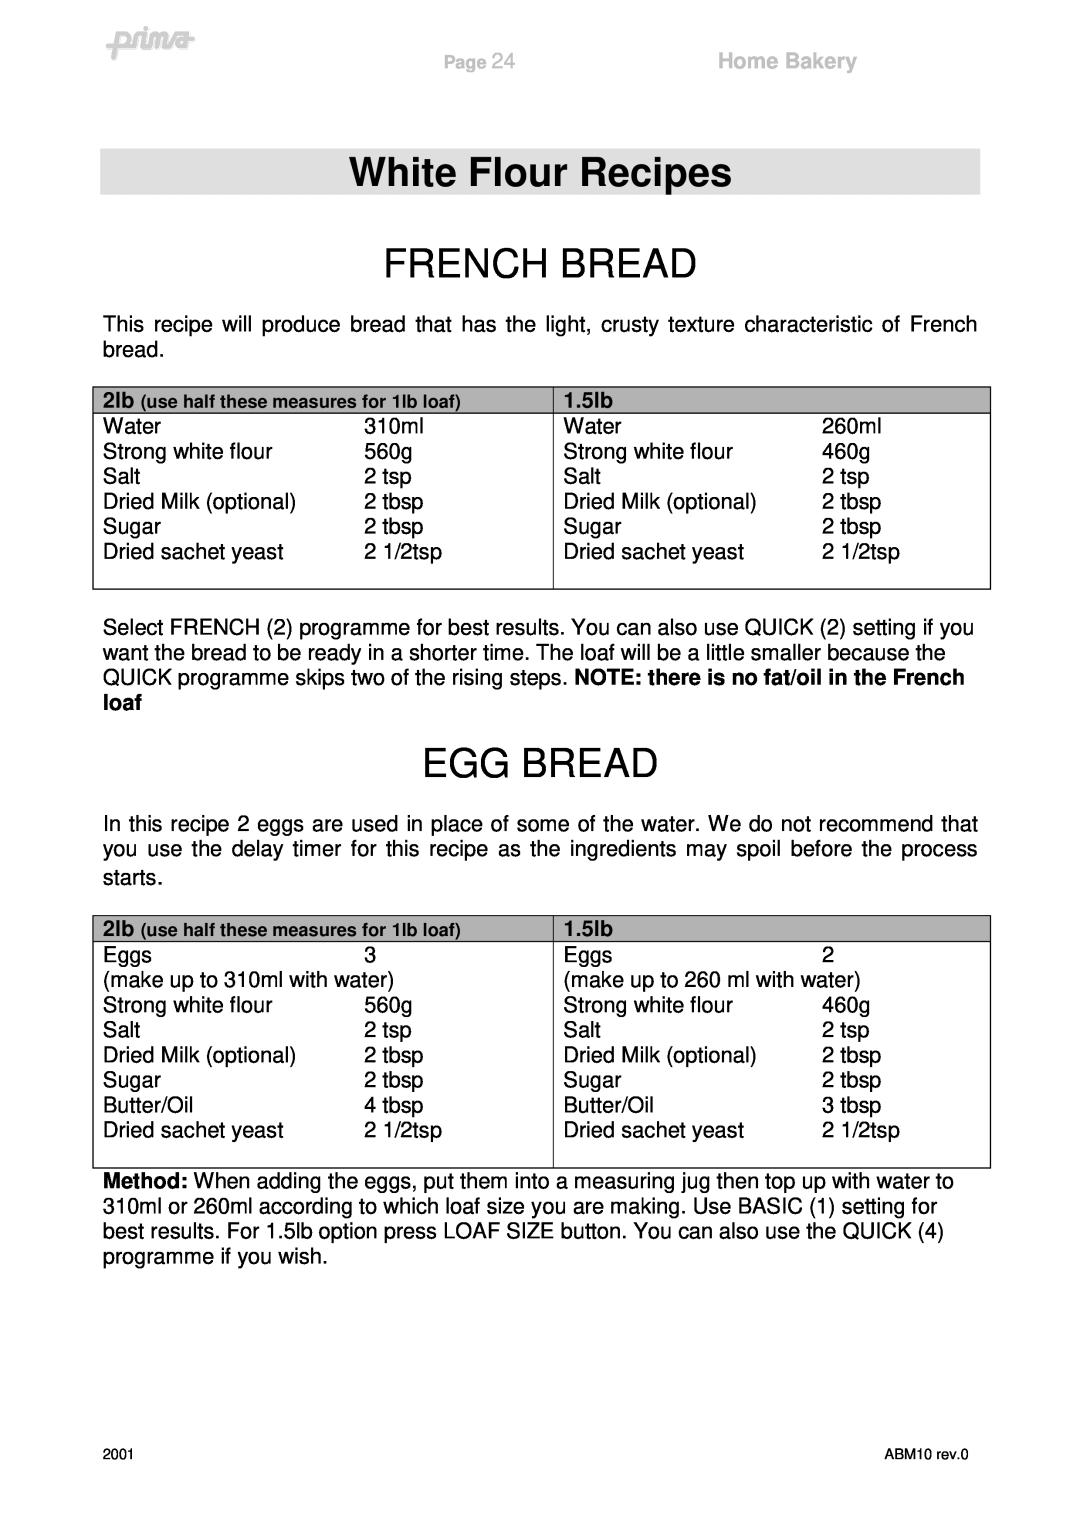 Prima ABM10 instruction manual White Flour Recipes, French Bread, Egg Bread, Home Bakery, 1.5lb 